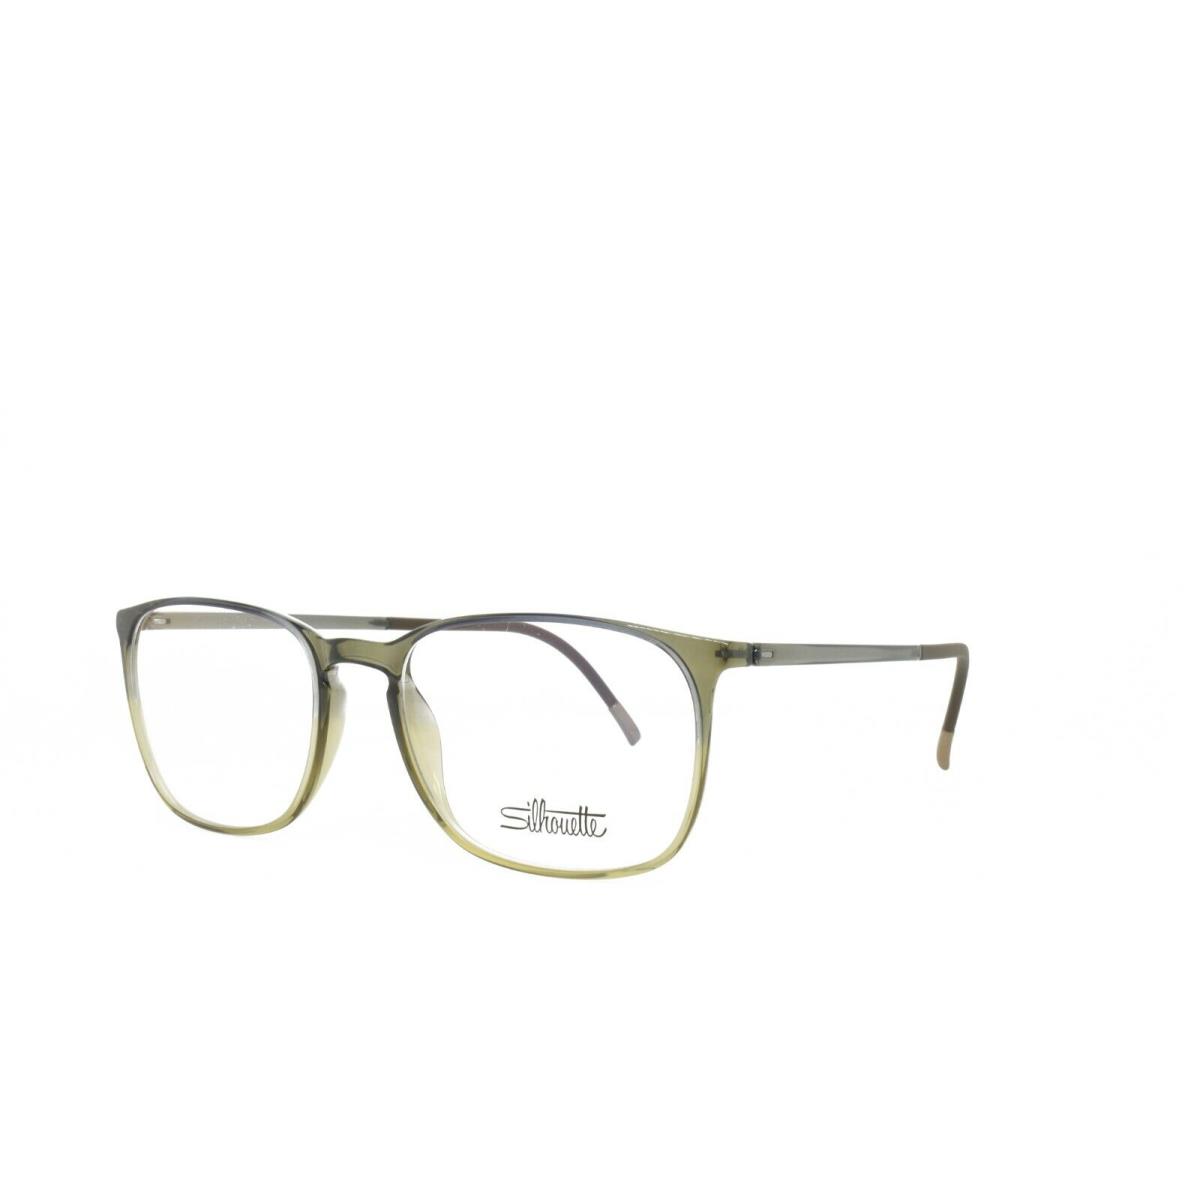 Silhouette Spx Illusion 2911 75 5510 Eyeglasses 55-18-145 Olive - Frame: Olive